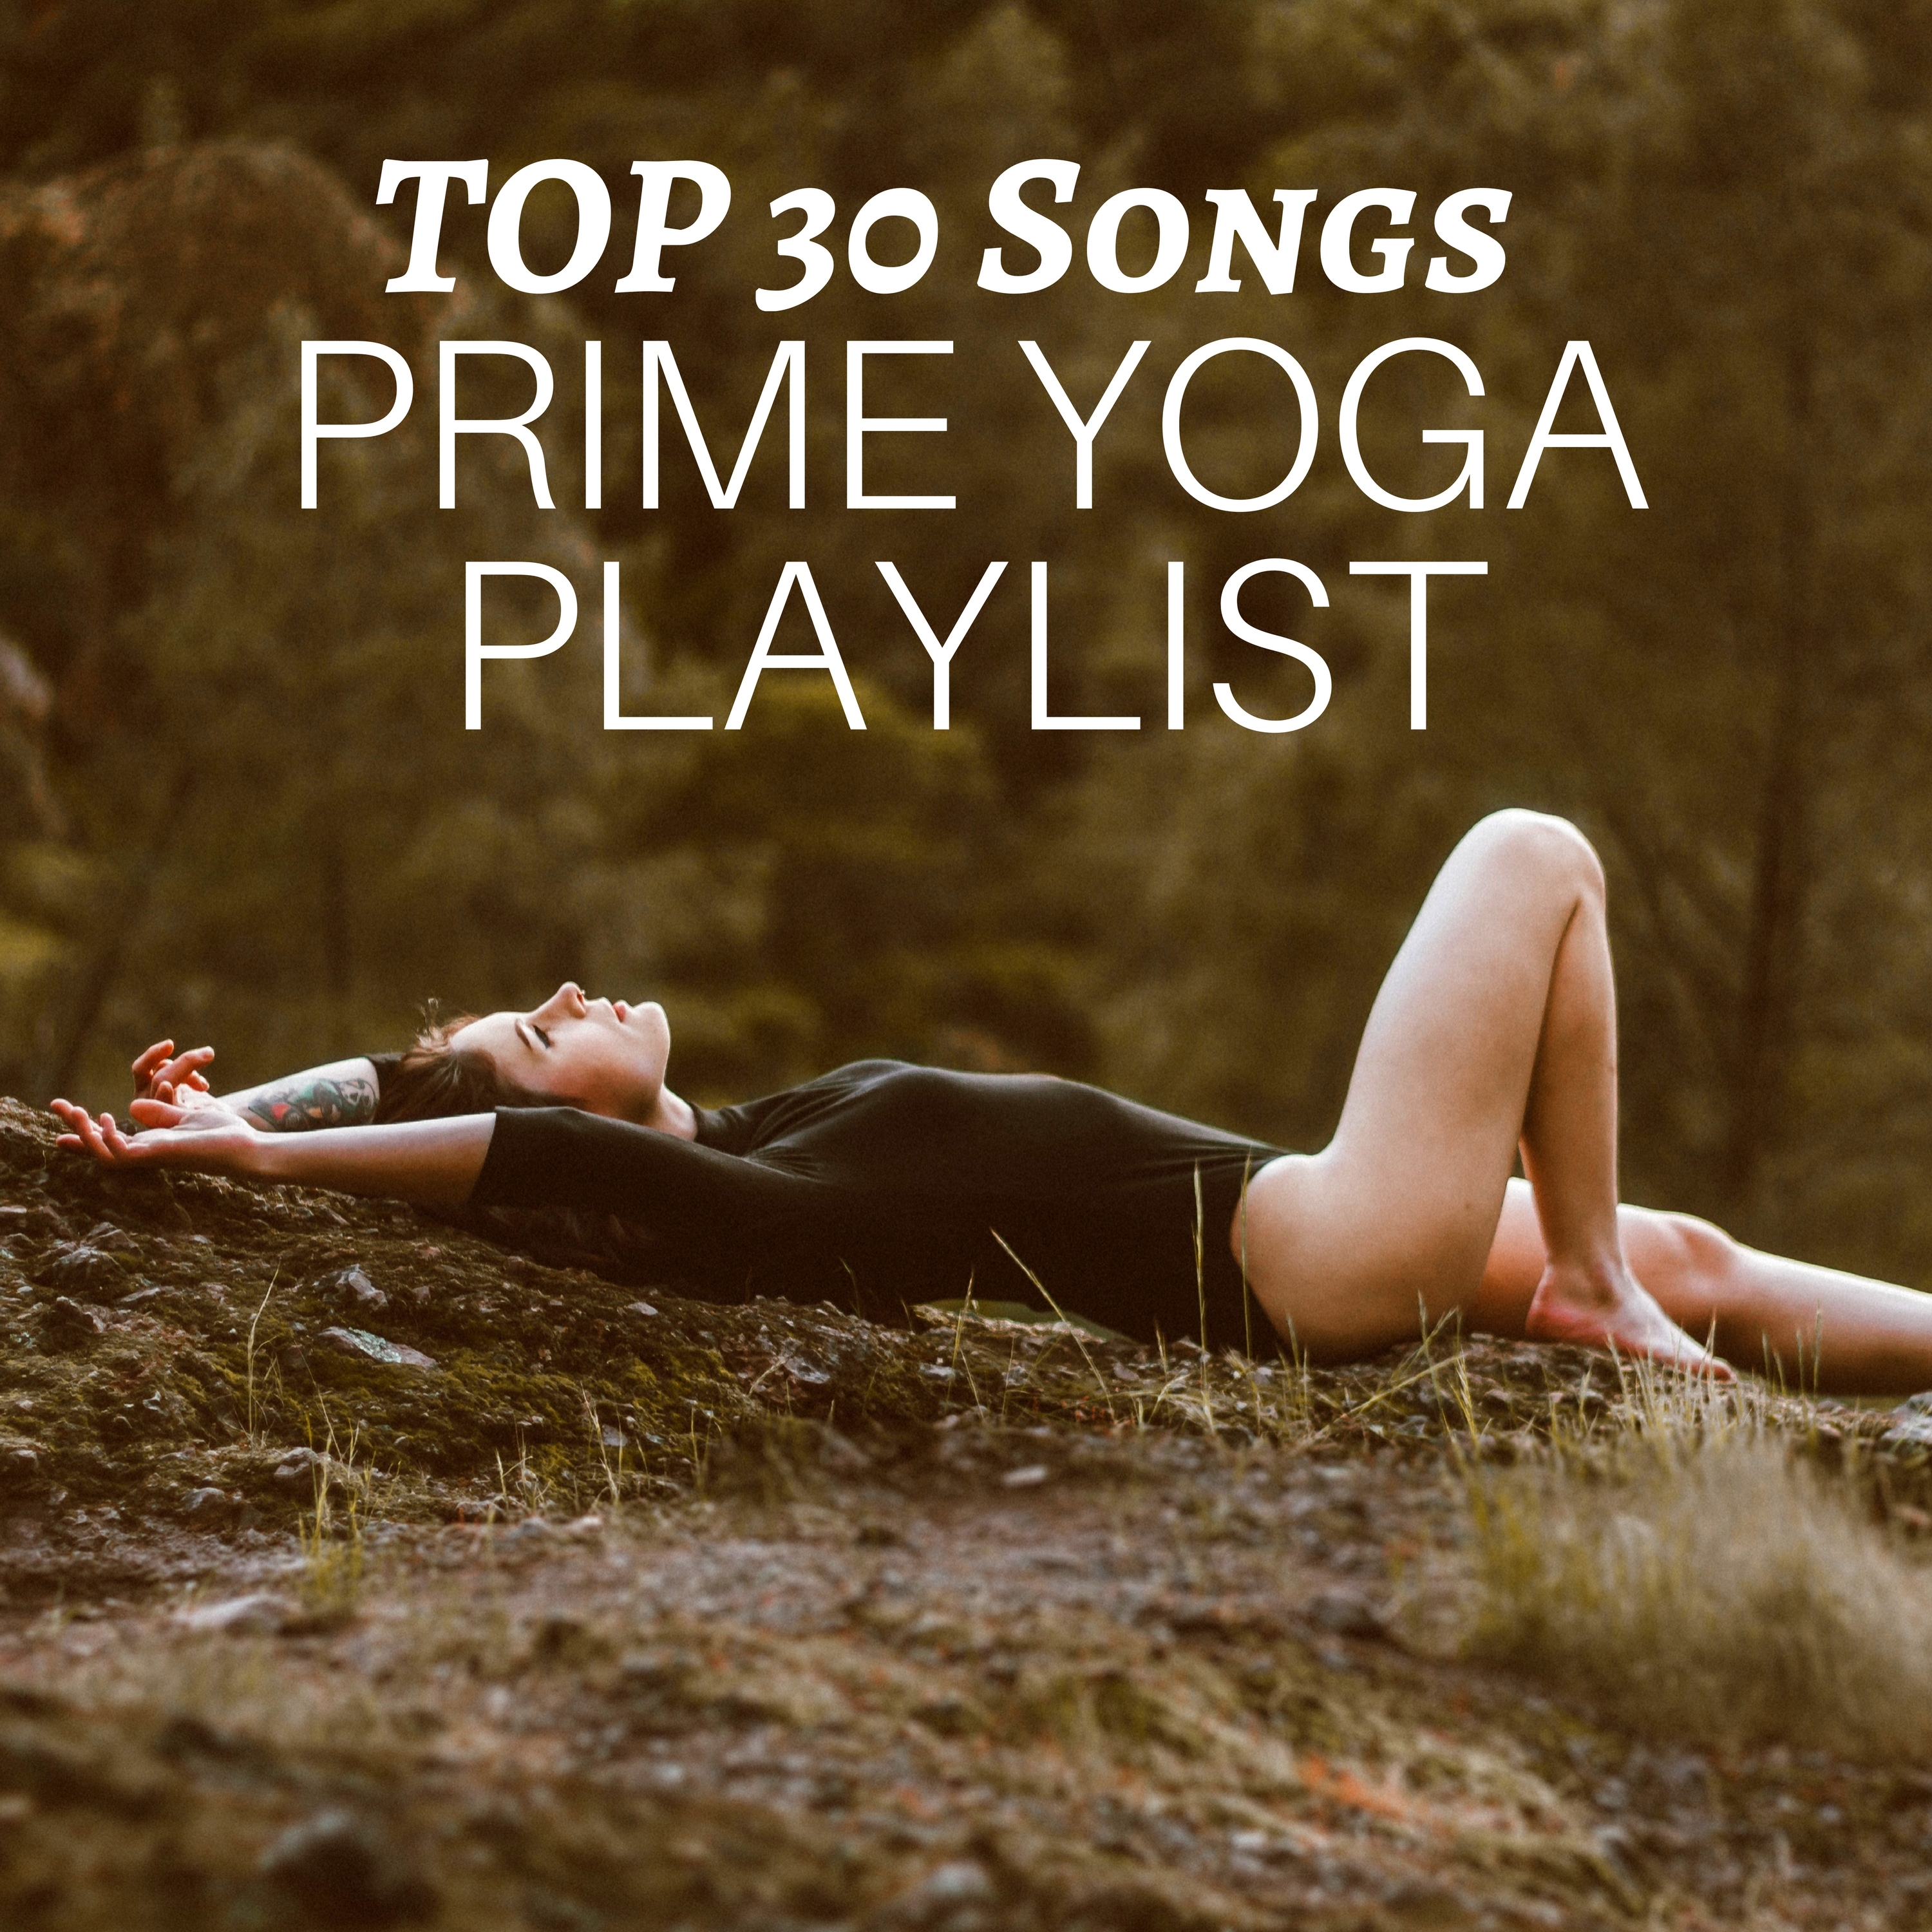 Prime Yoga Playlist